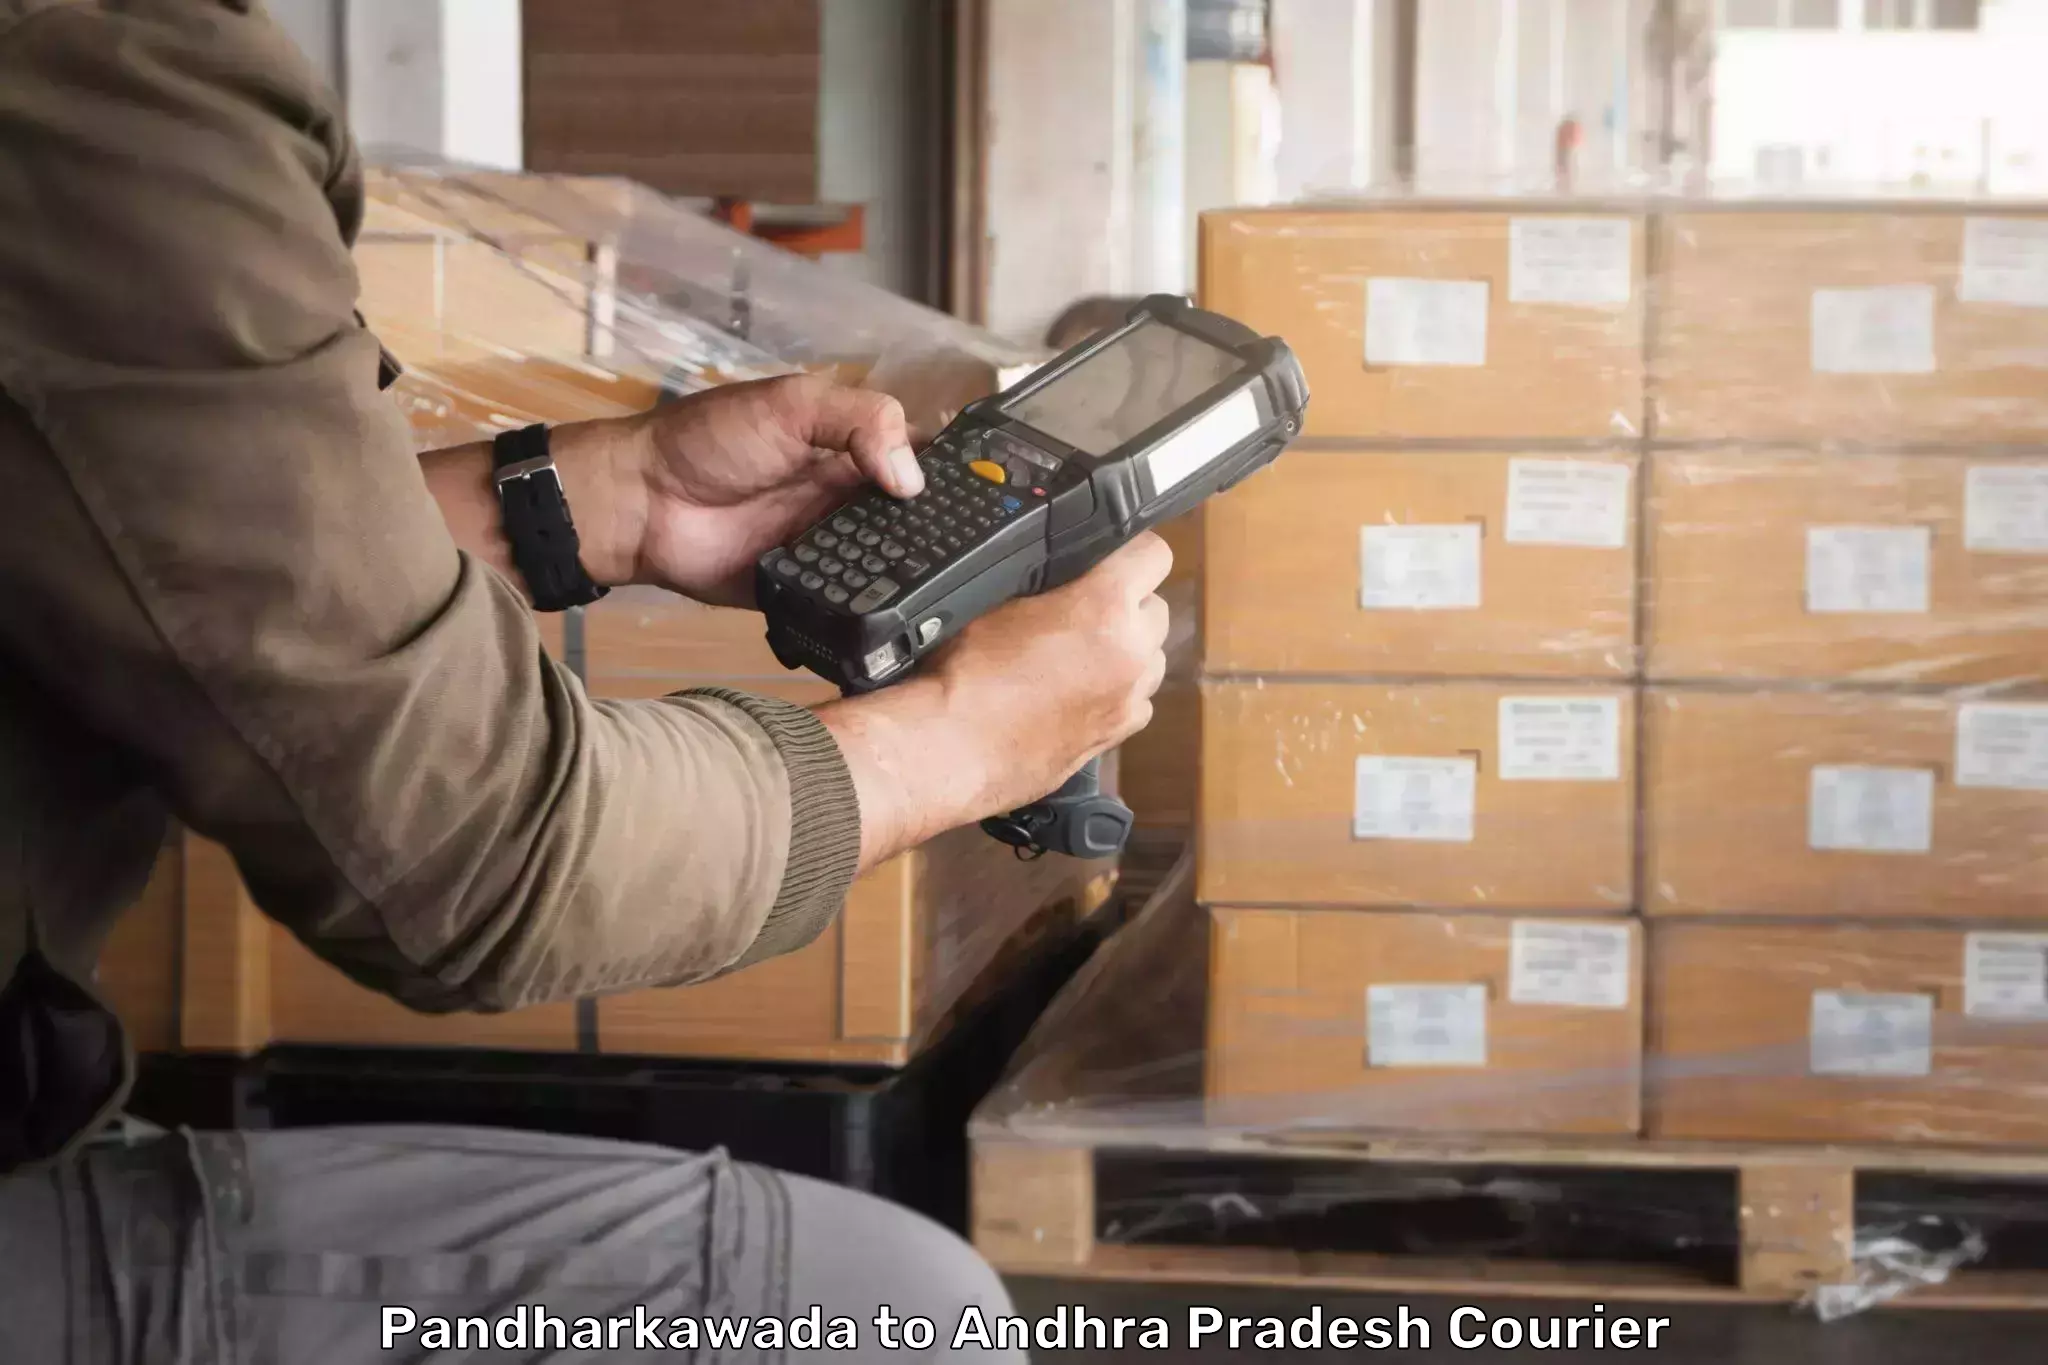 Flexible delivery scheduling Pandharkawada to Buckinghampet